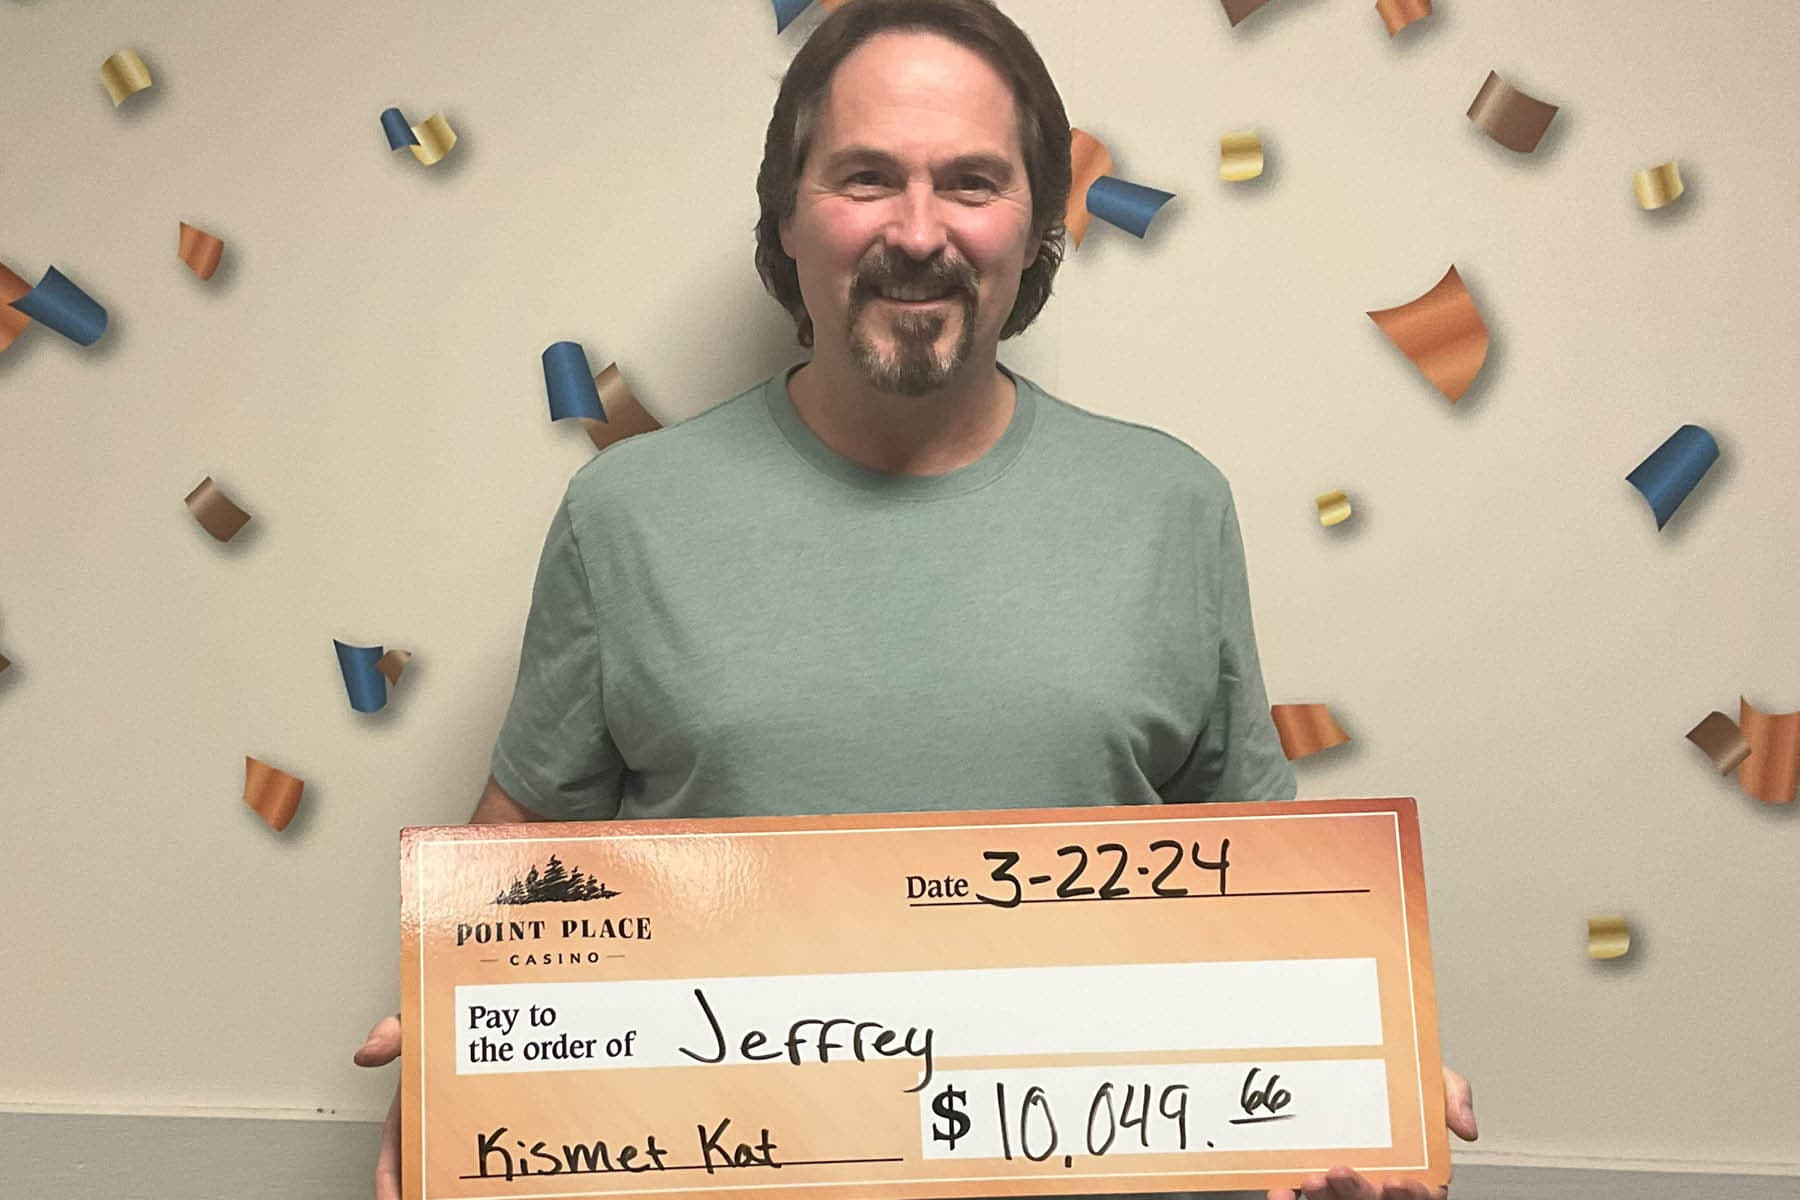 Jeffrey won $10,049